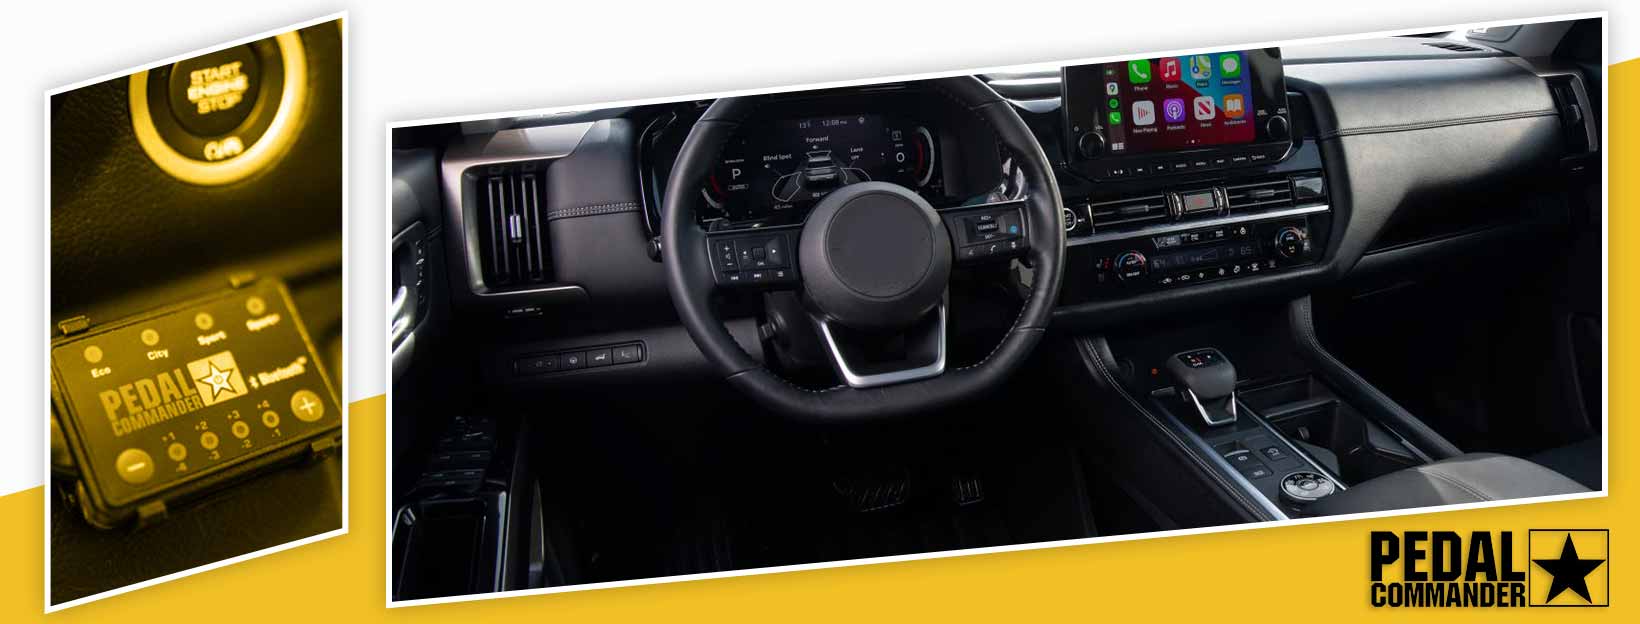 Pedal Commander for Nissan Pathfinder - interior